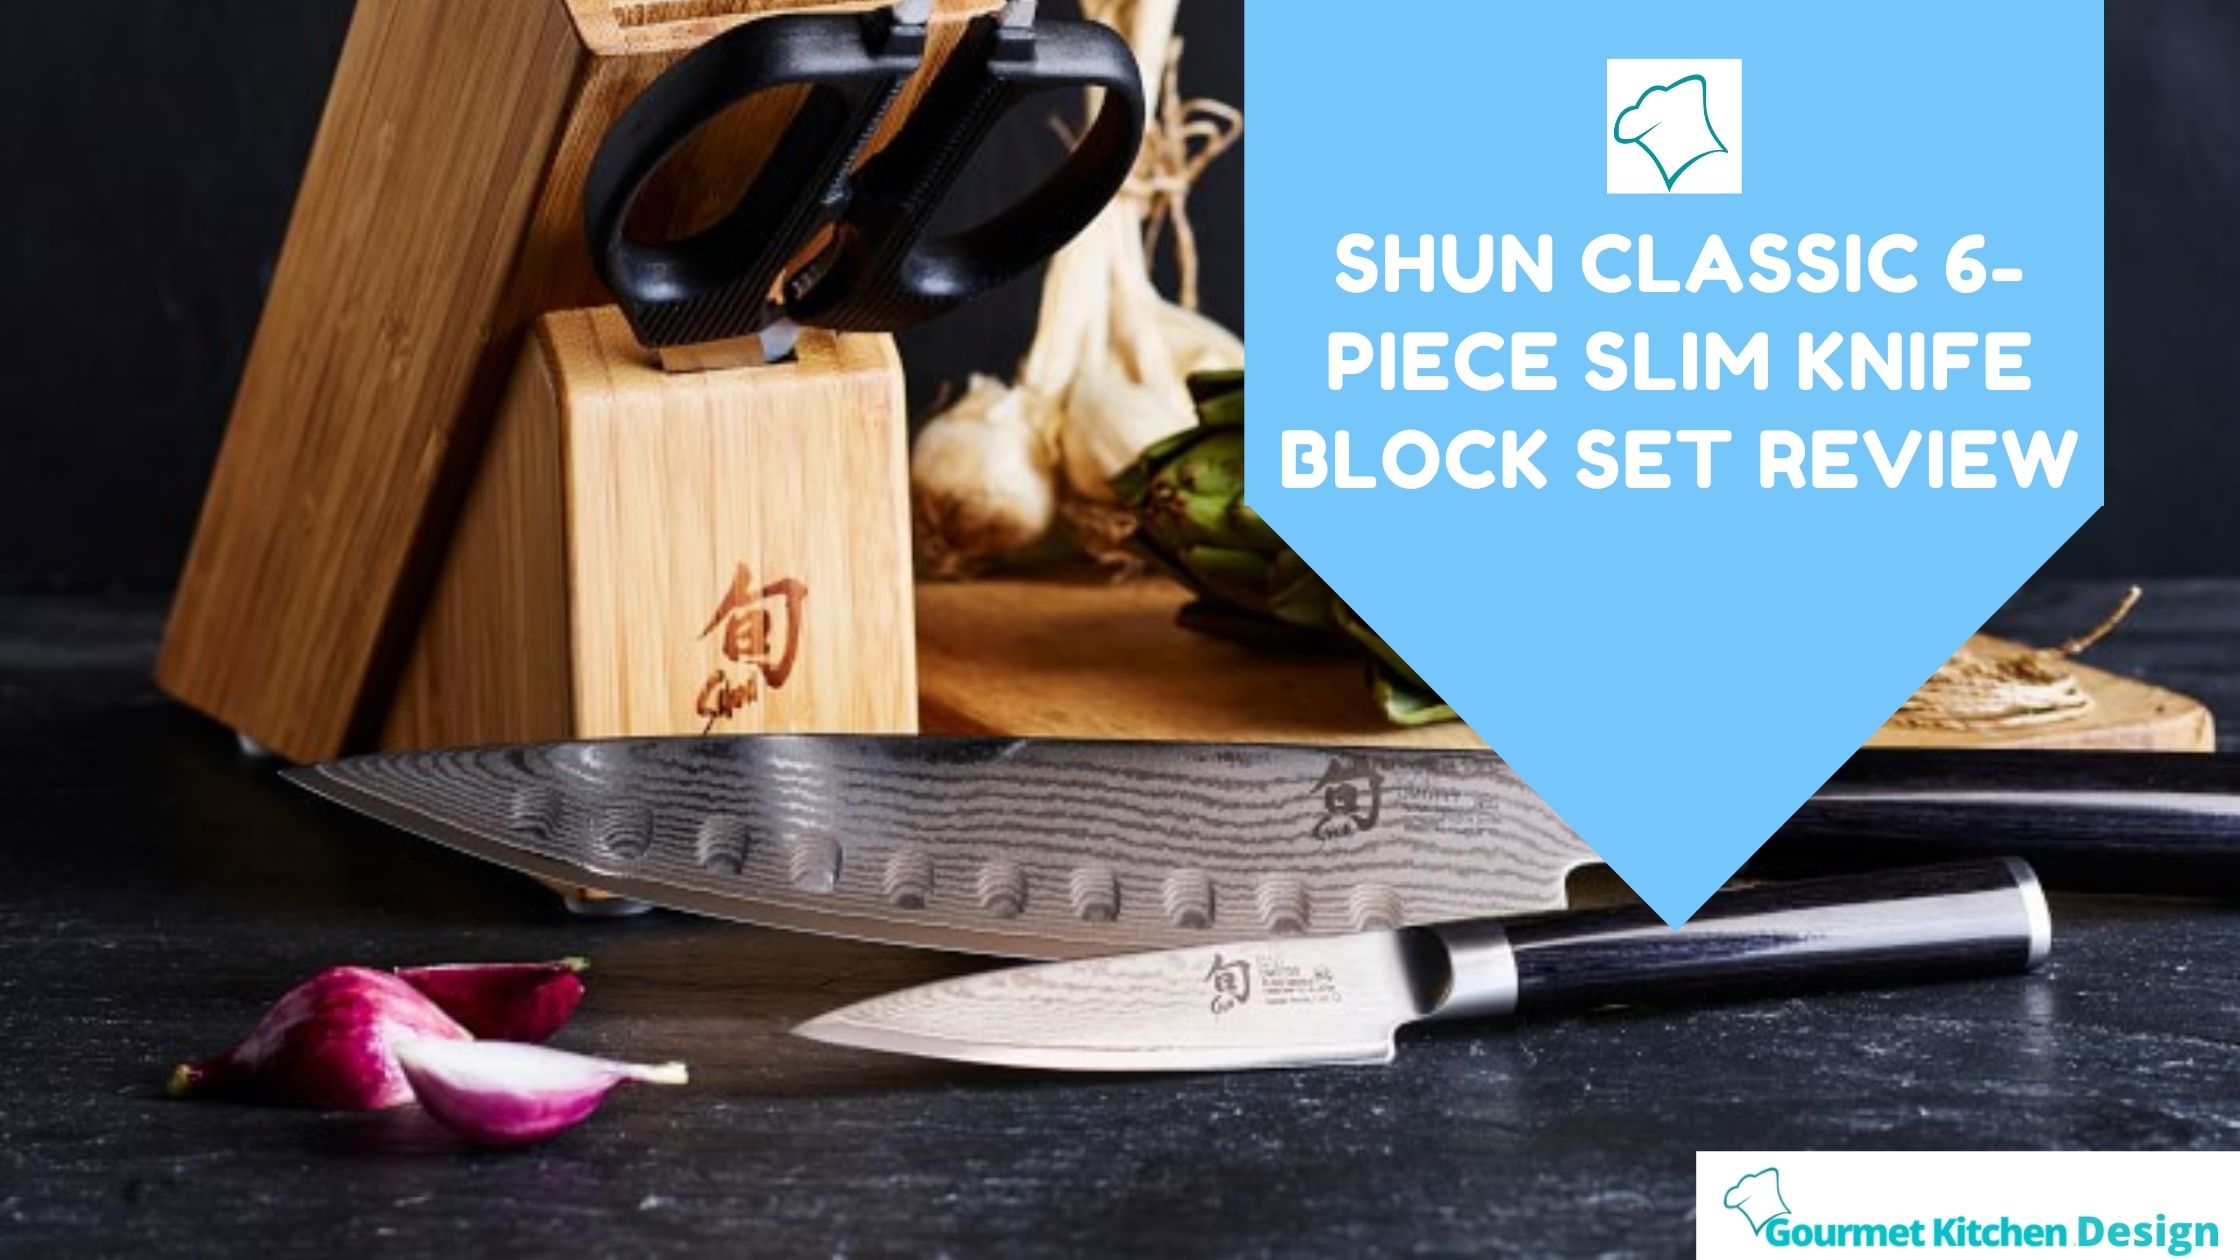 Shun Classic 6-piece Slim Knife Block Set